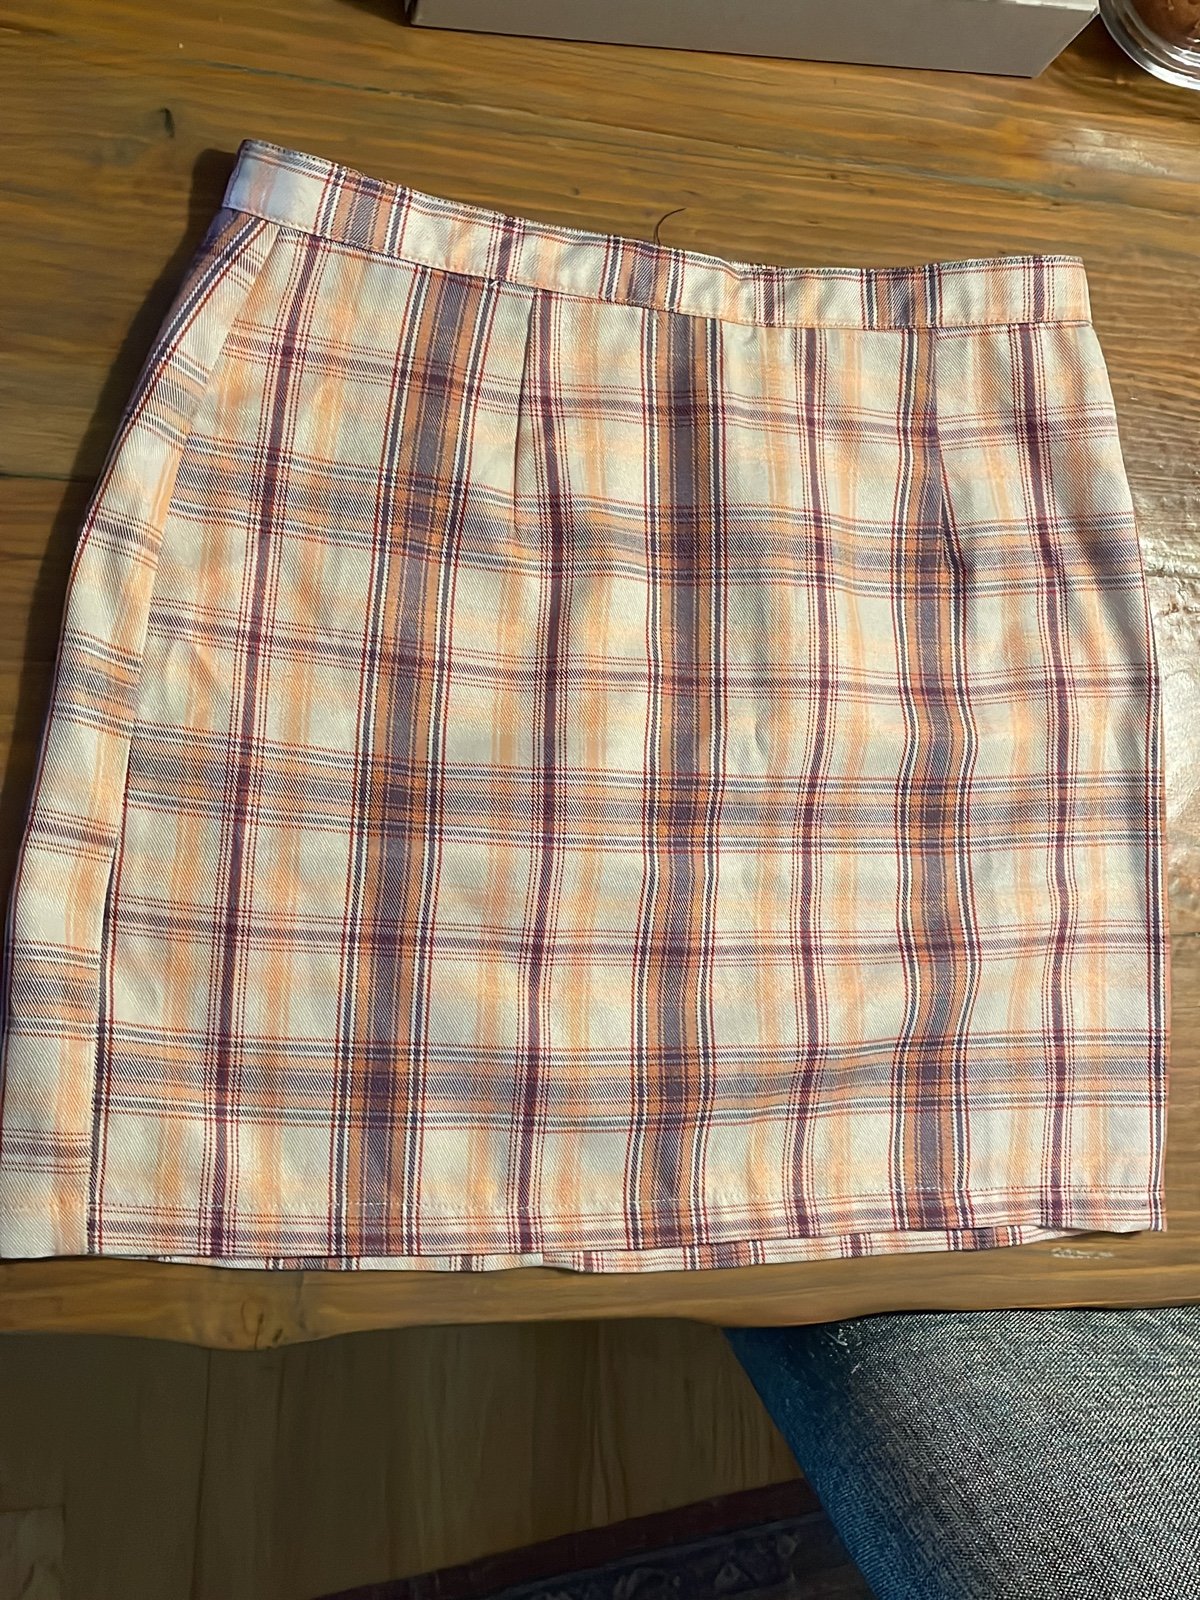 Gorgeous plaid skirt kU75vJbJk on sale